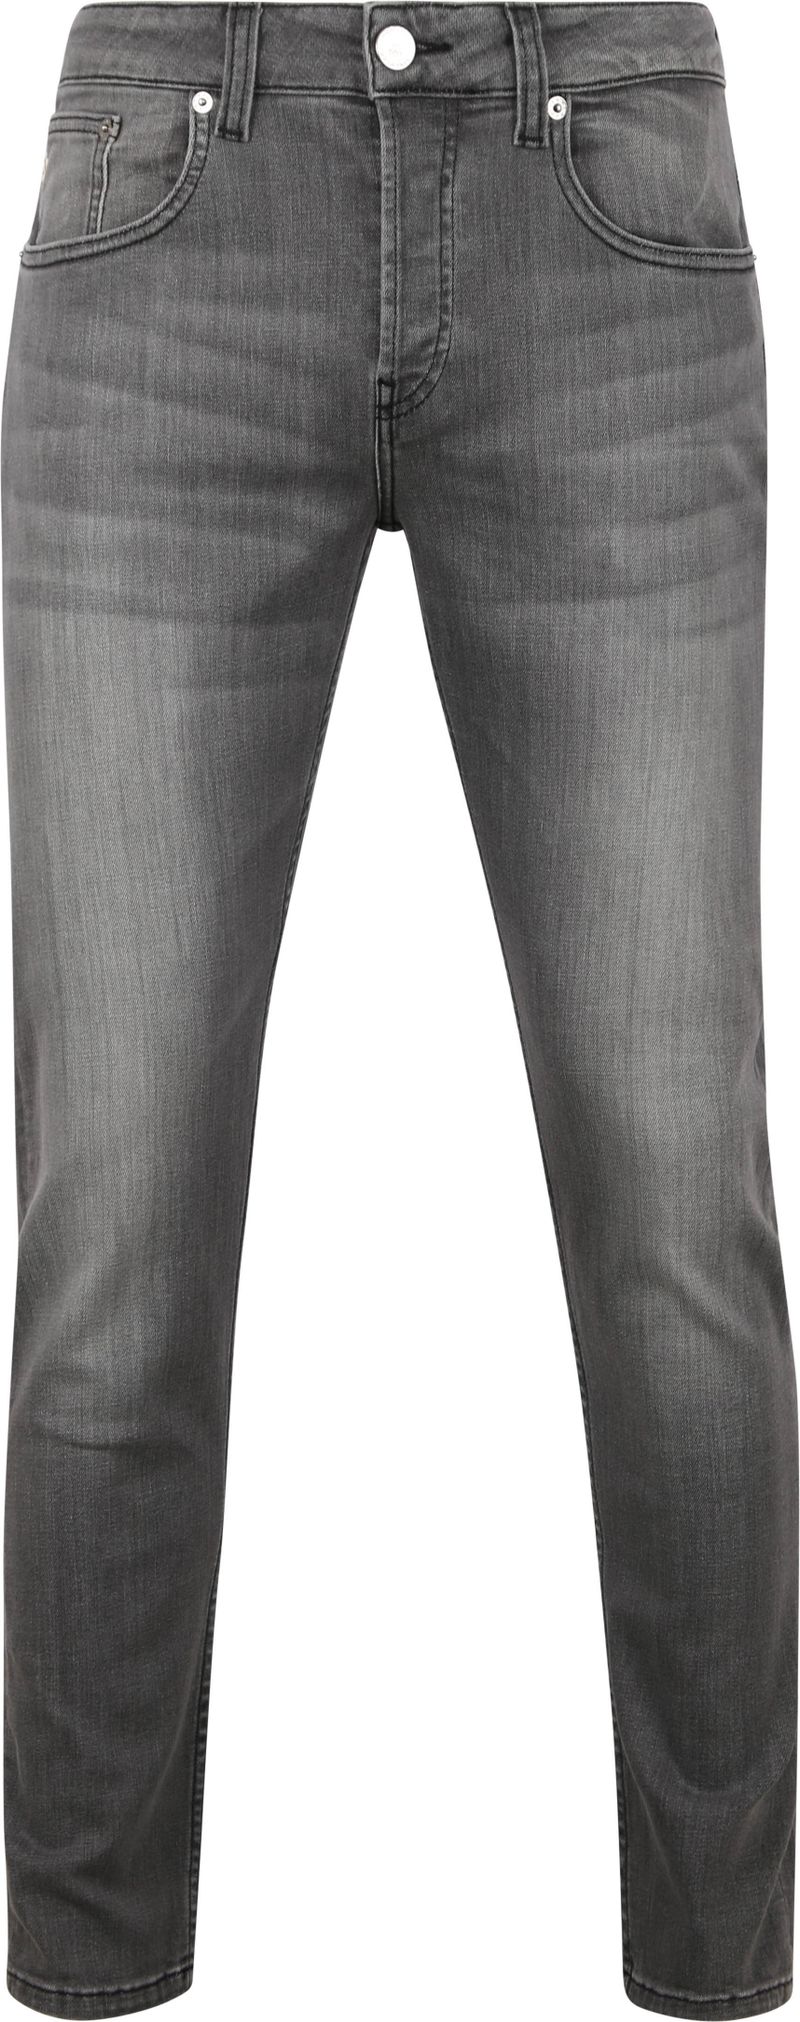 MUD Jeans Denim Slim-Fit Grau - Größe W 30 - L 32 von MUD Jeans